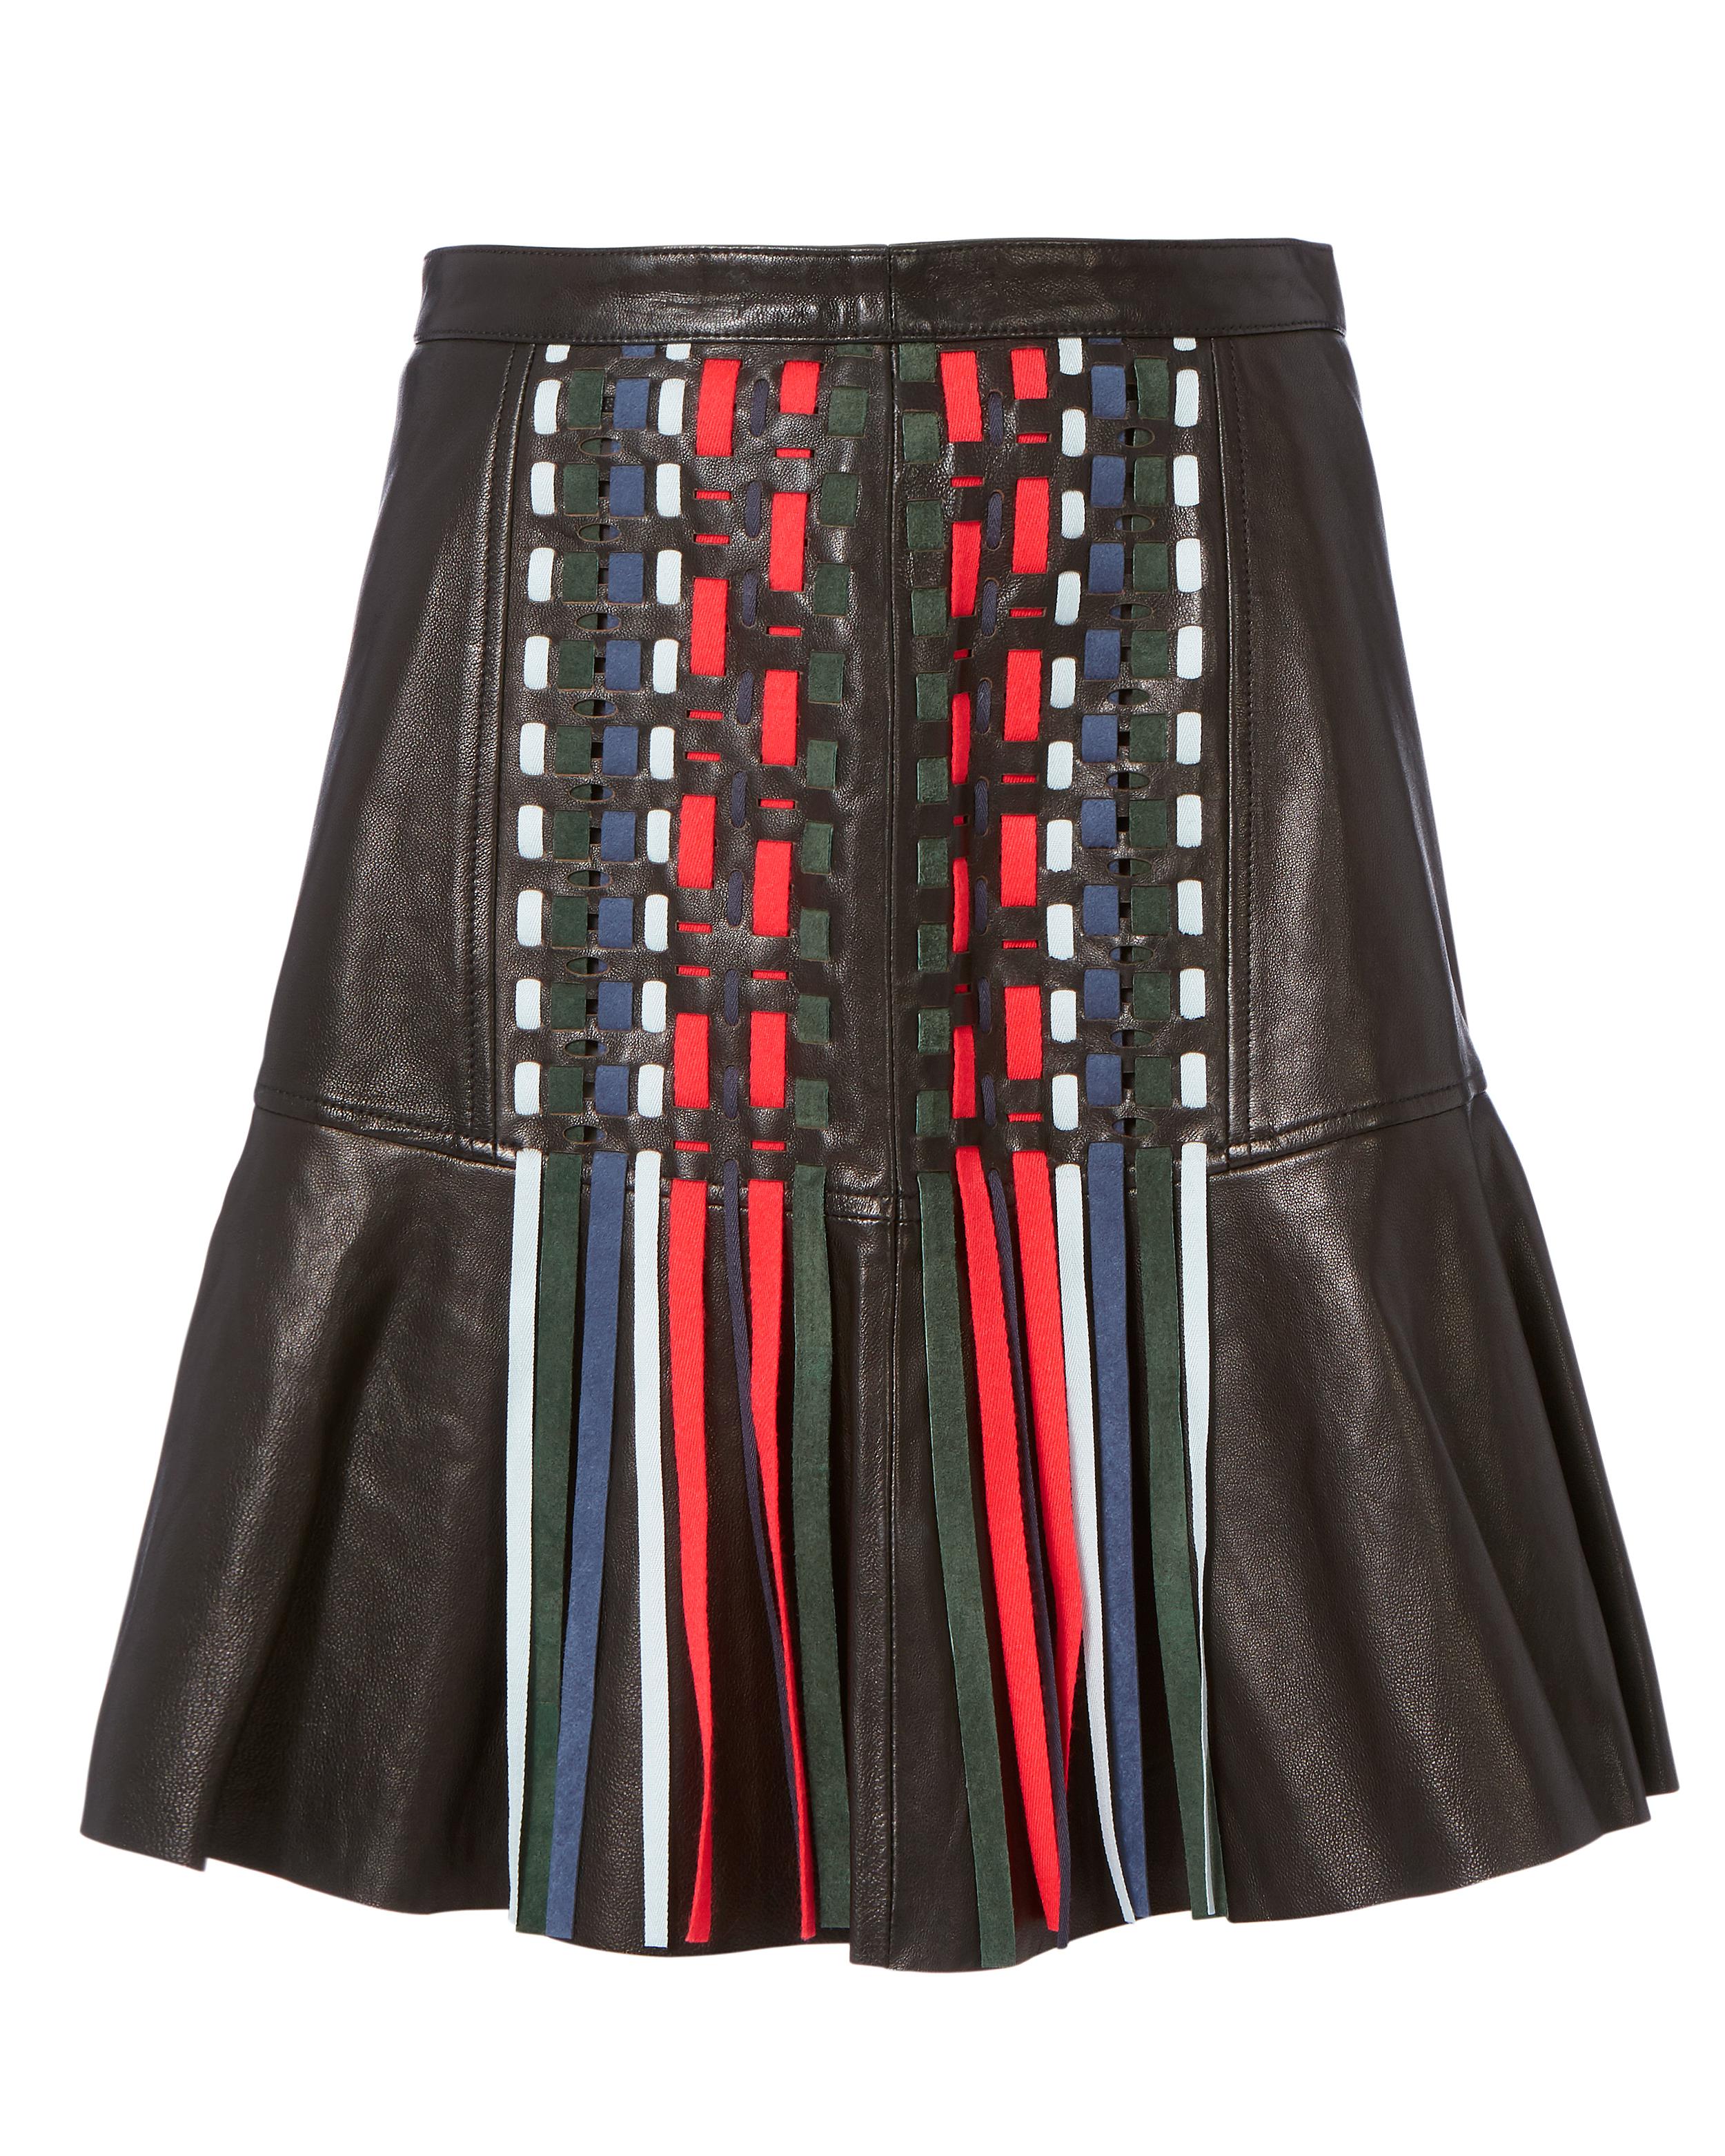 Lyst - Tanya Taylor Mattie Leather Mini Skirt in Black - Save 30%